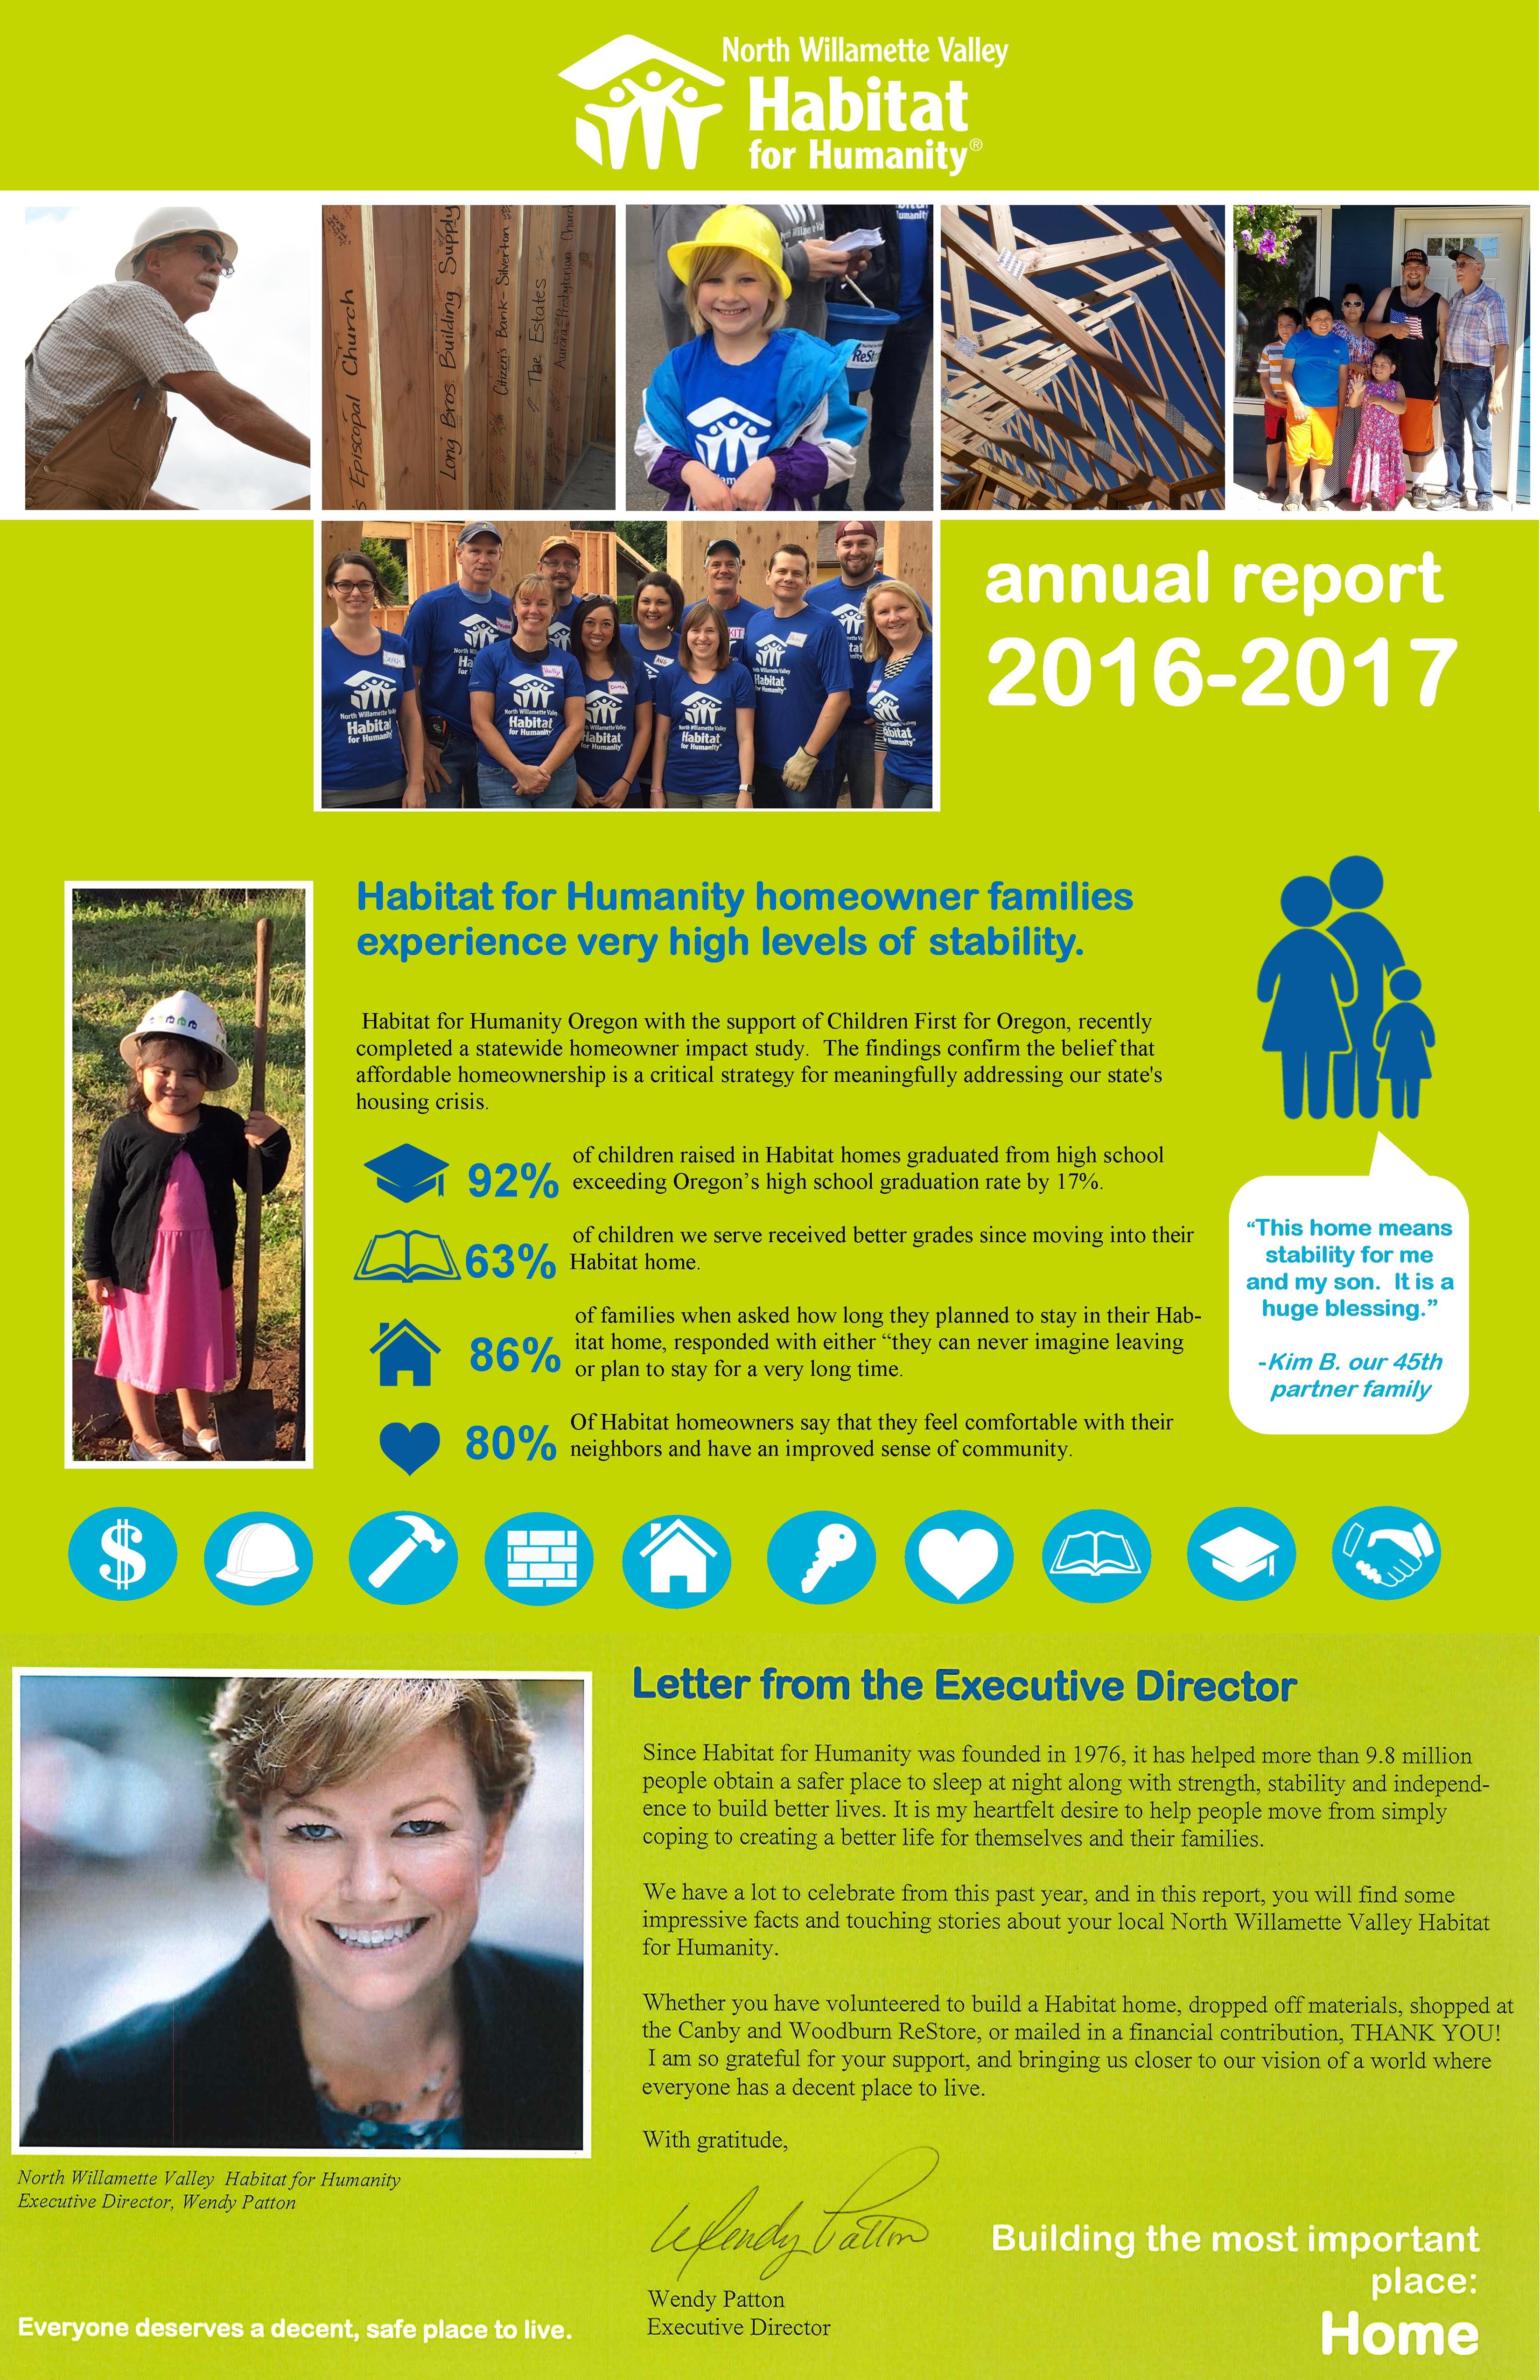 2016-2017 annual report